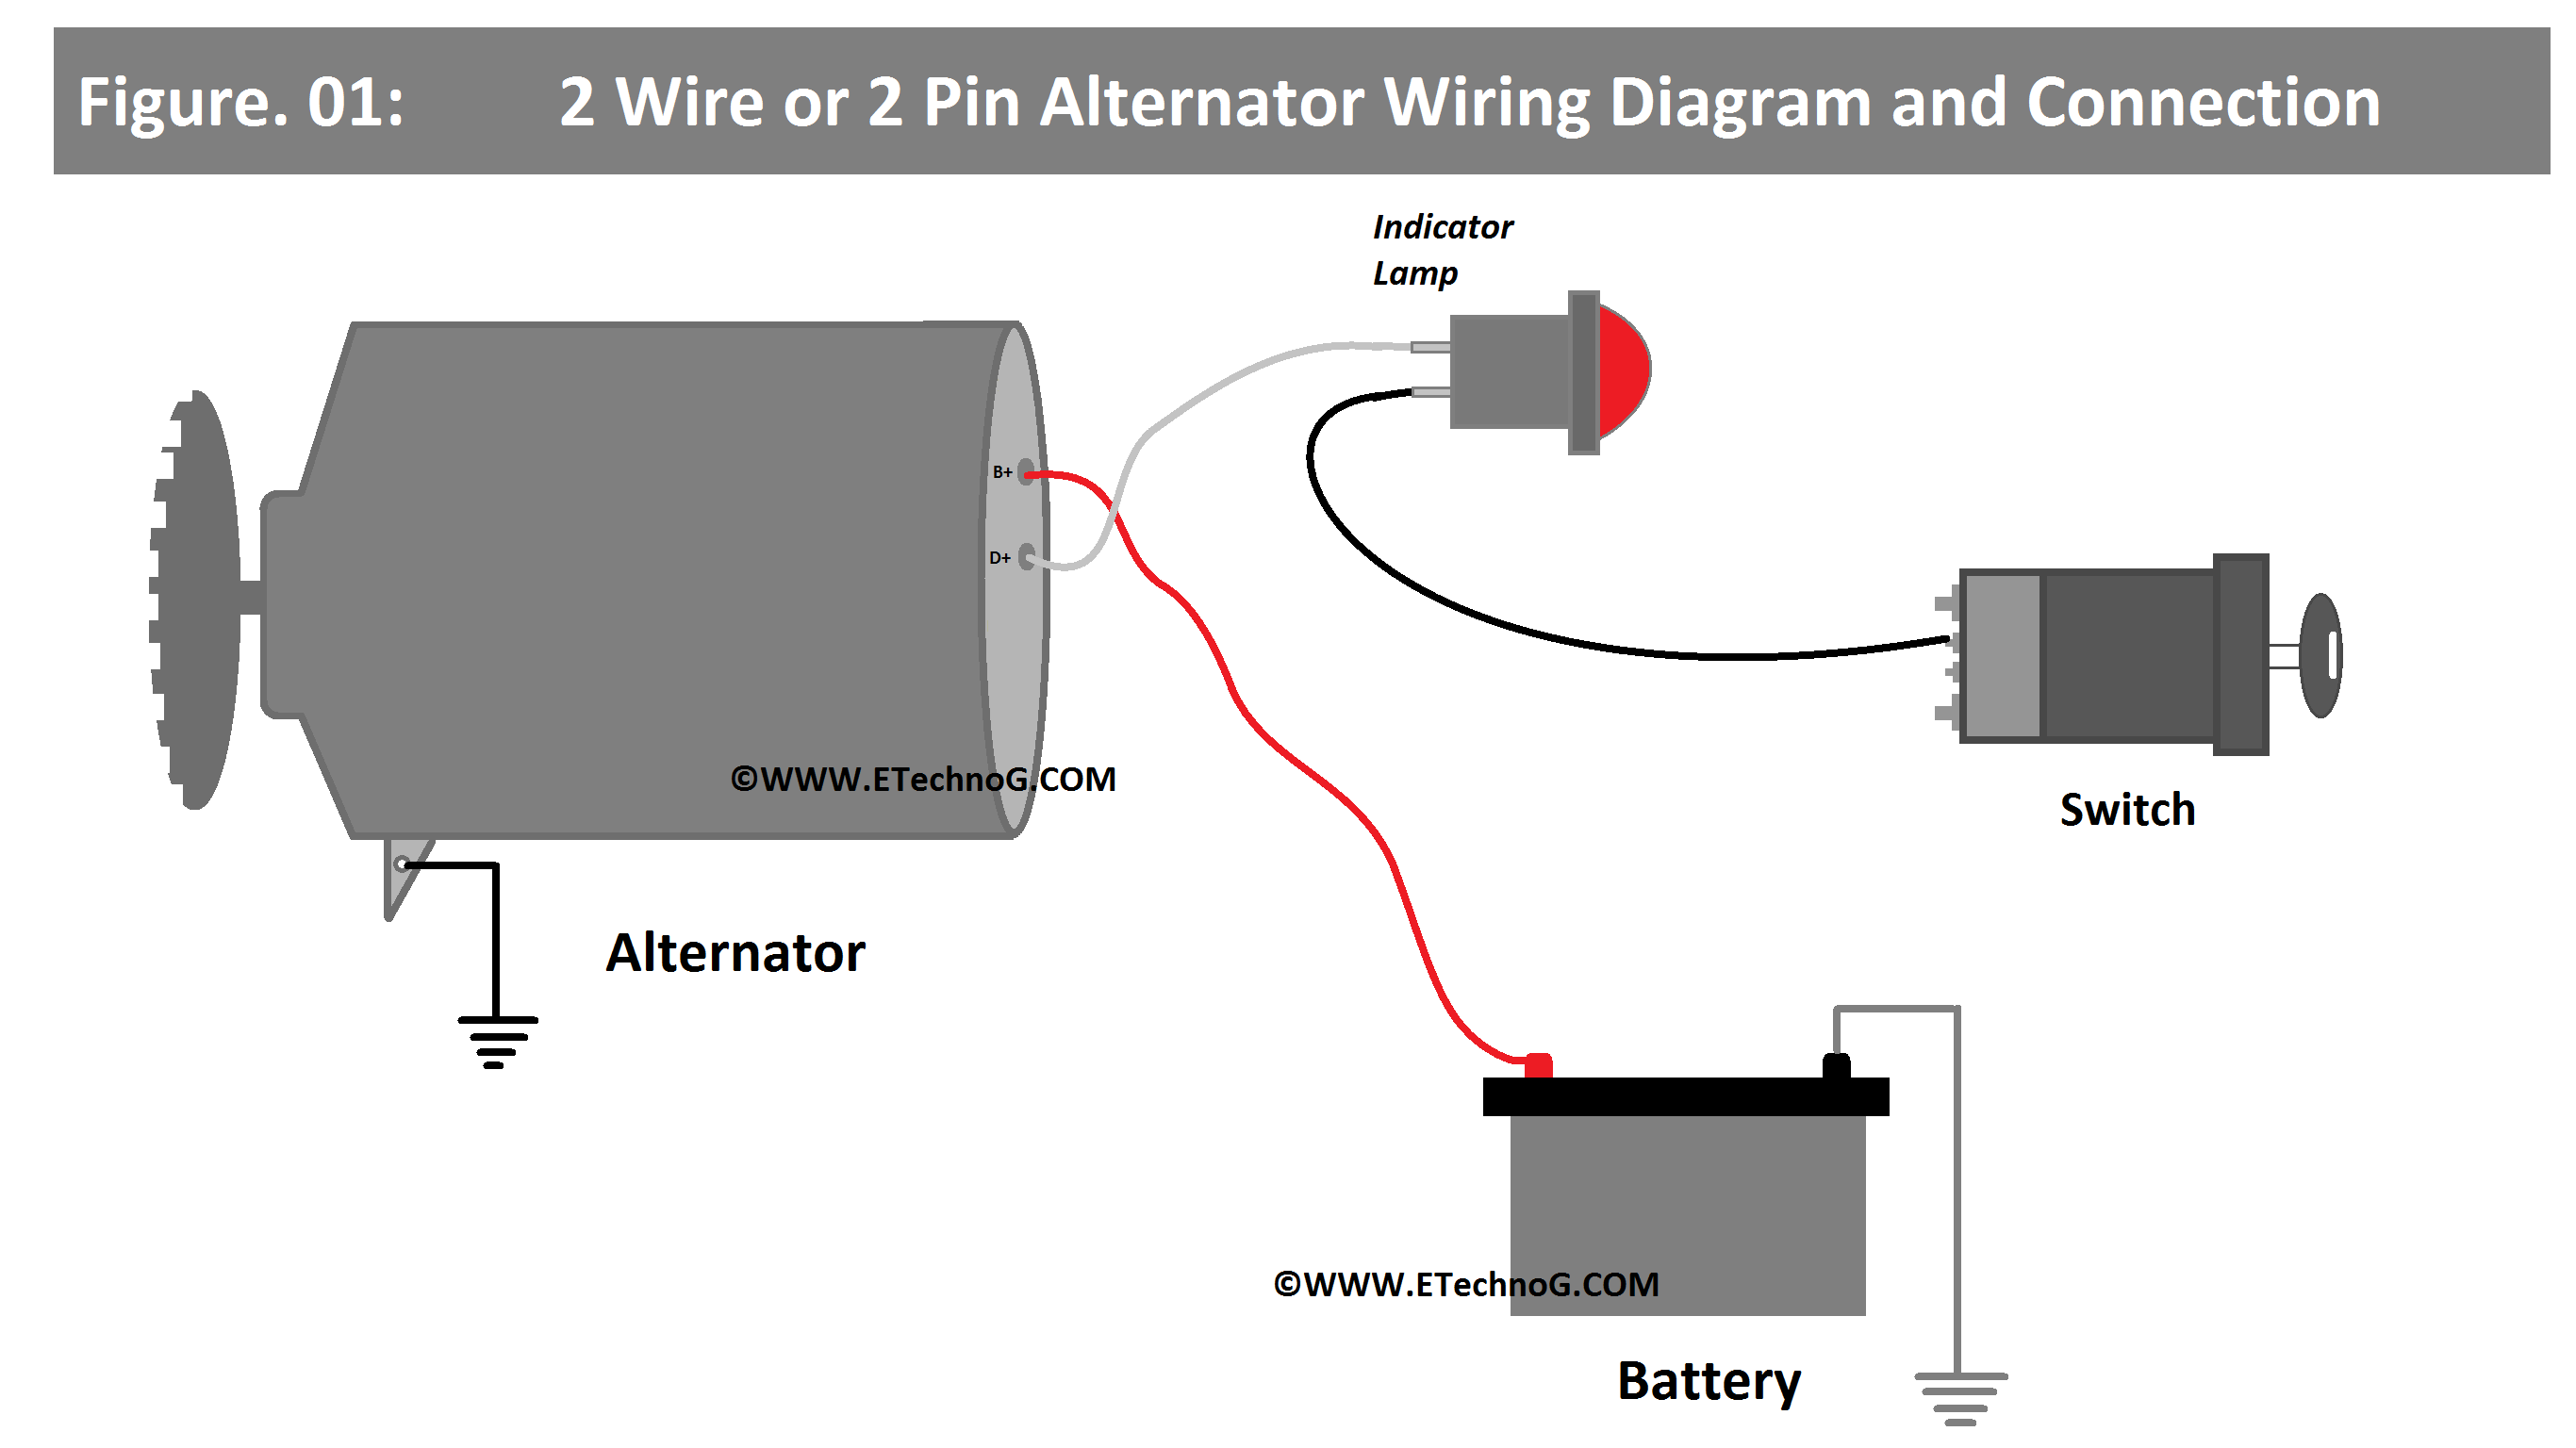 2 Wire or 2 Pin Alternator Wiring Diagram in Car